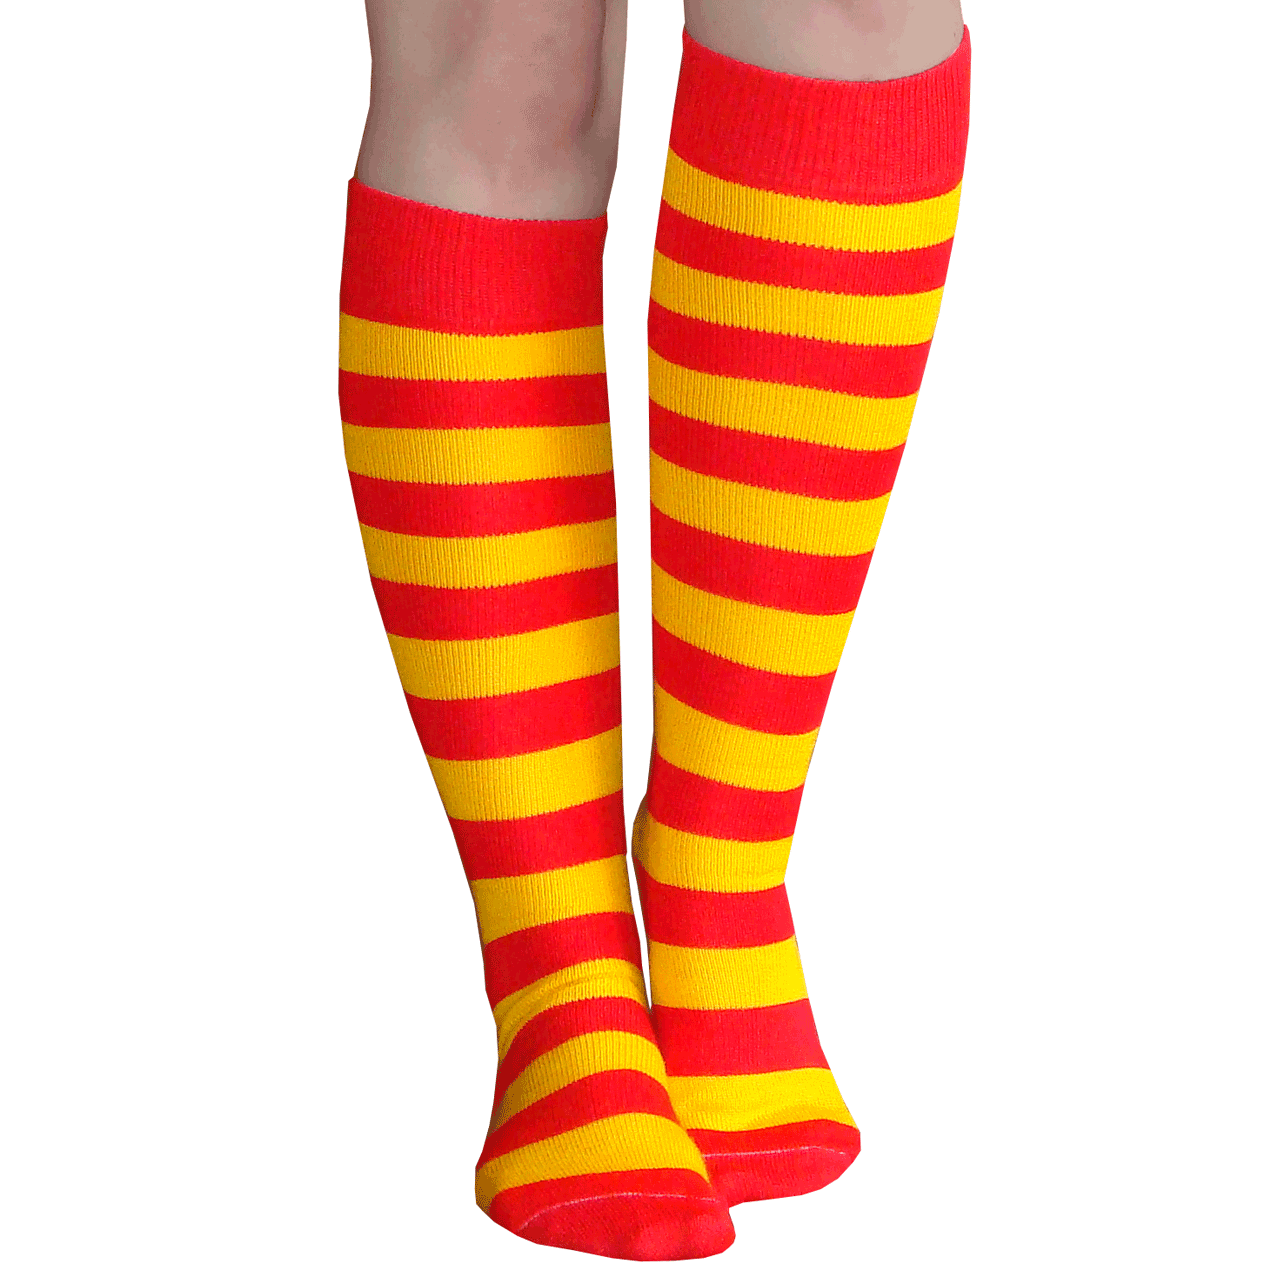 Red/Gold Striped Socks